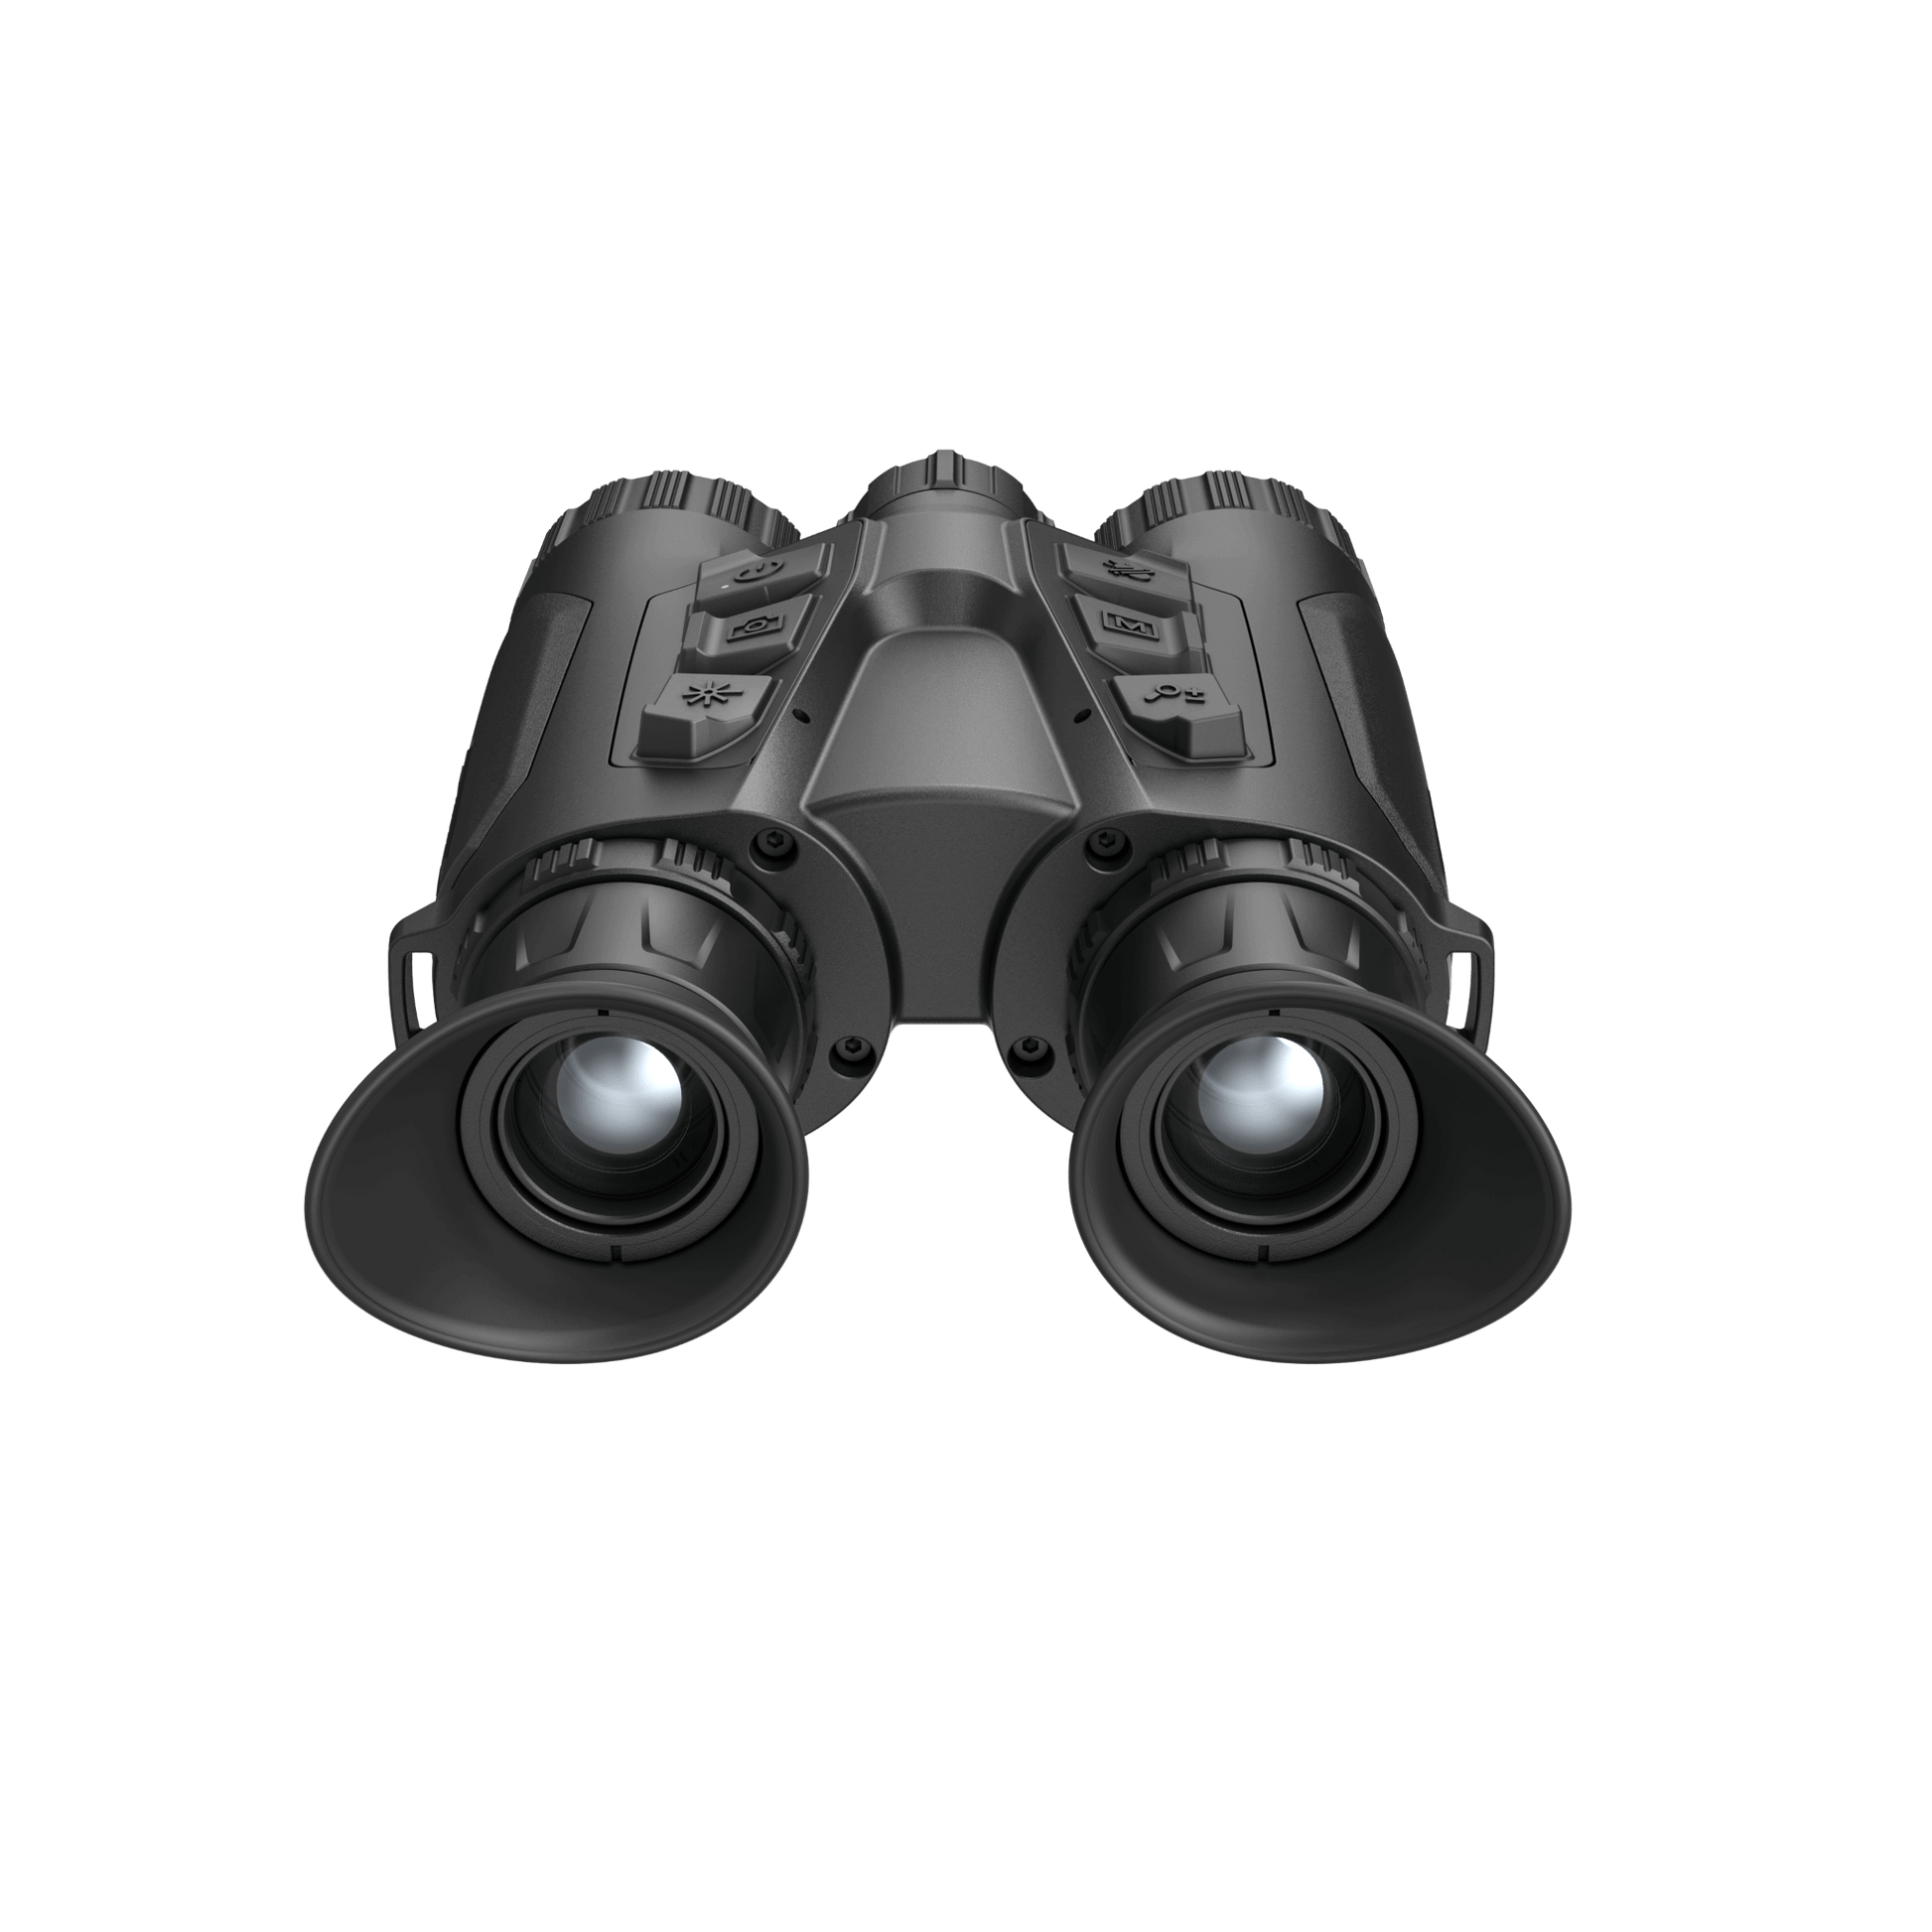 HikMicro Habrok HQ35L Multi-Function Night Vision Thermal Binoculars - Rear View